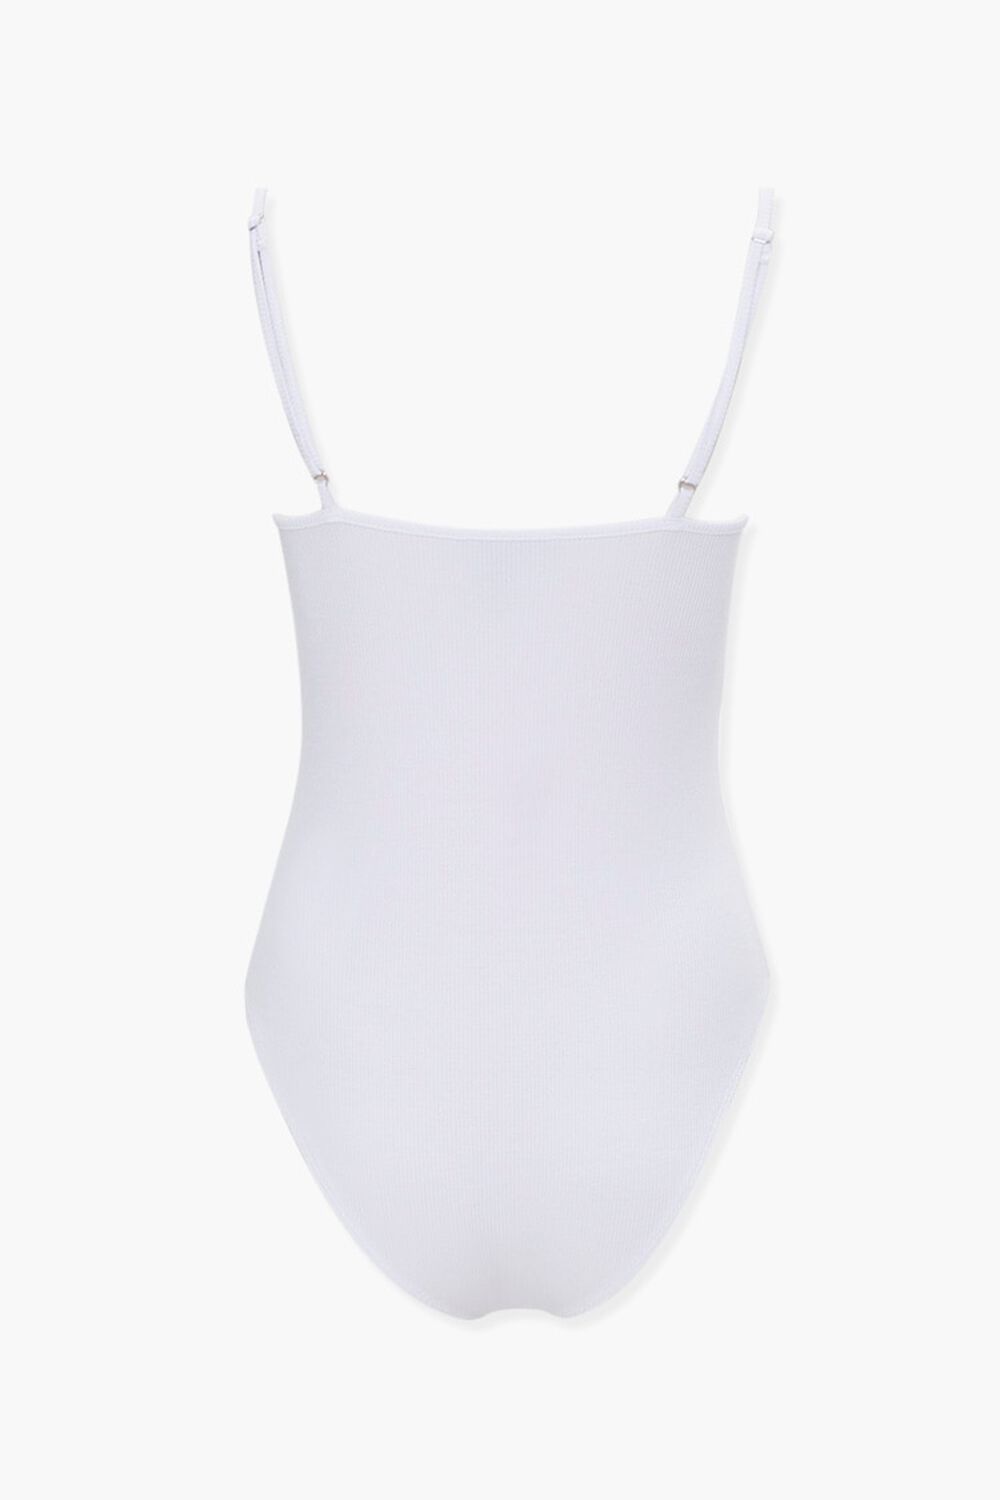 WHITE Ribbed Knit Cami Bodysuit, image 3